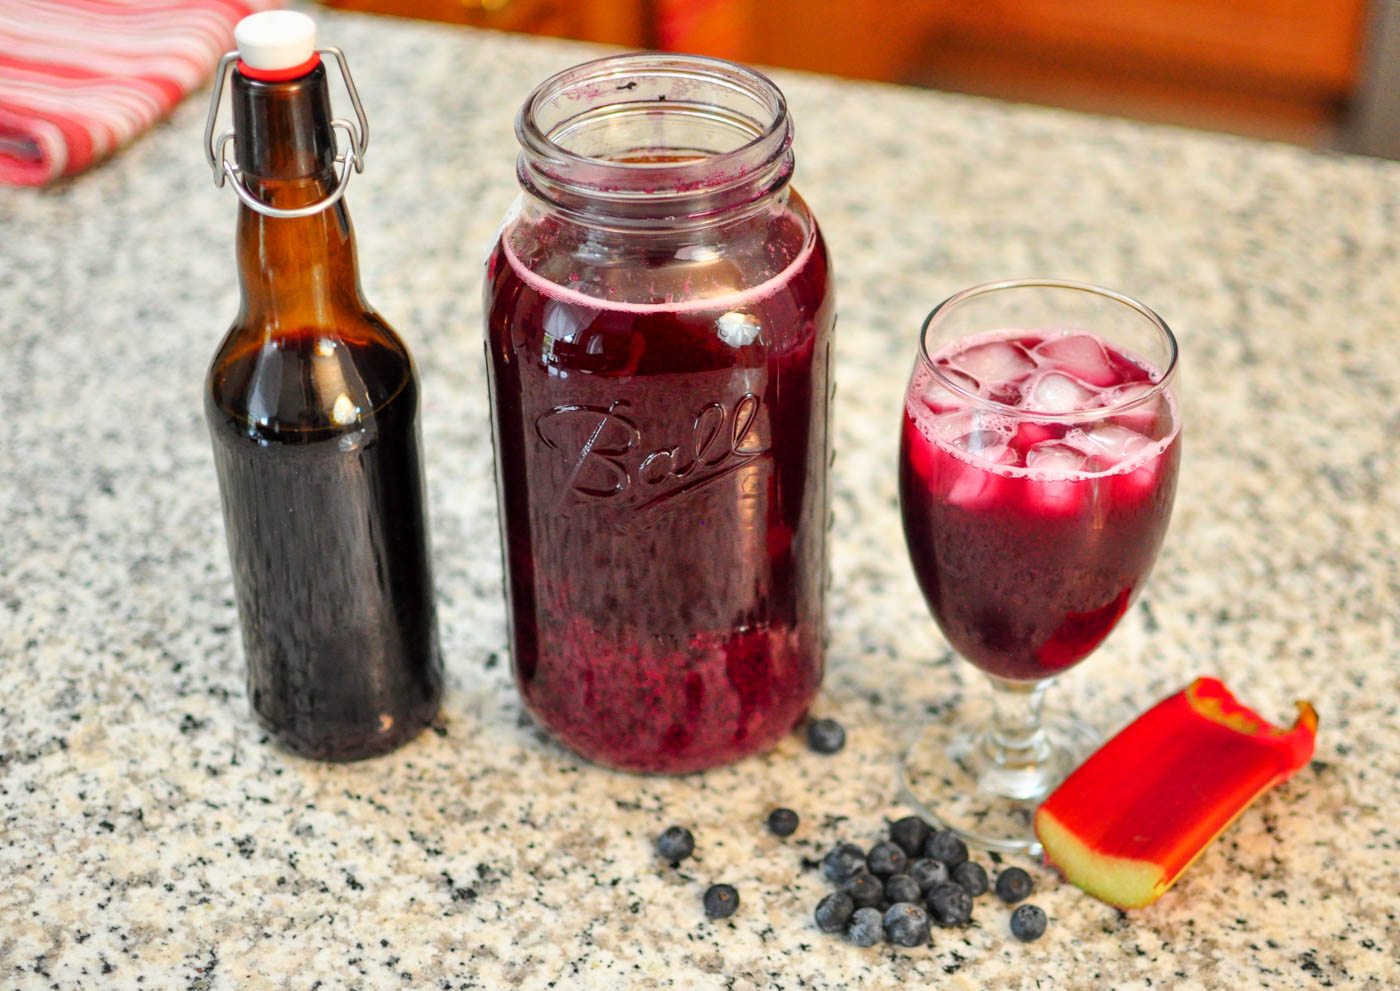 How to make homemade soda blueberry rhubarb using ginger bug